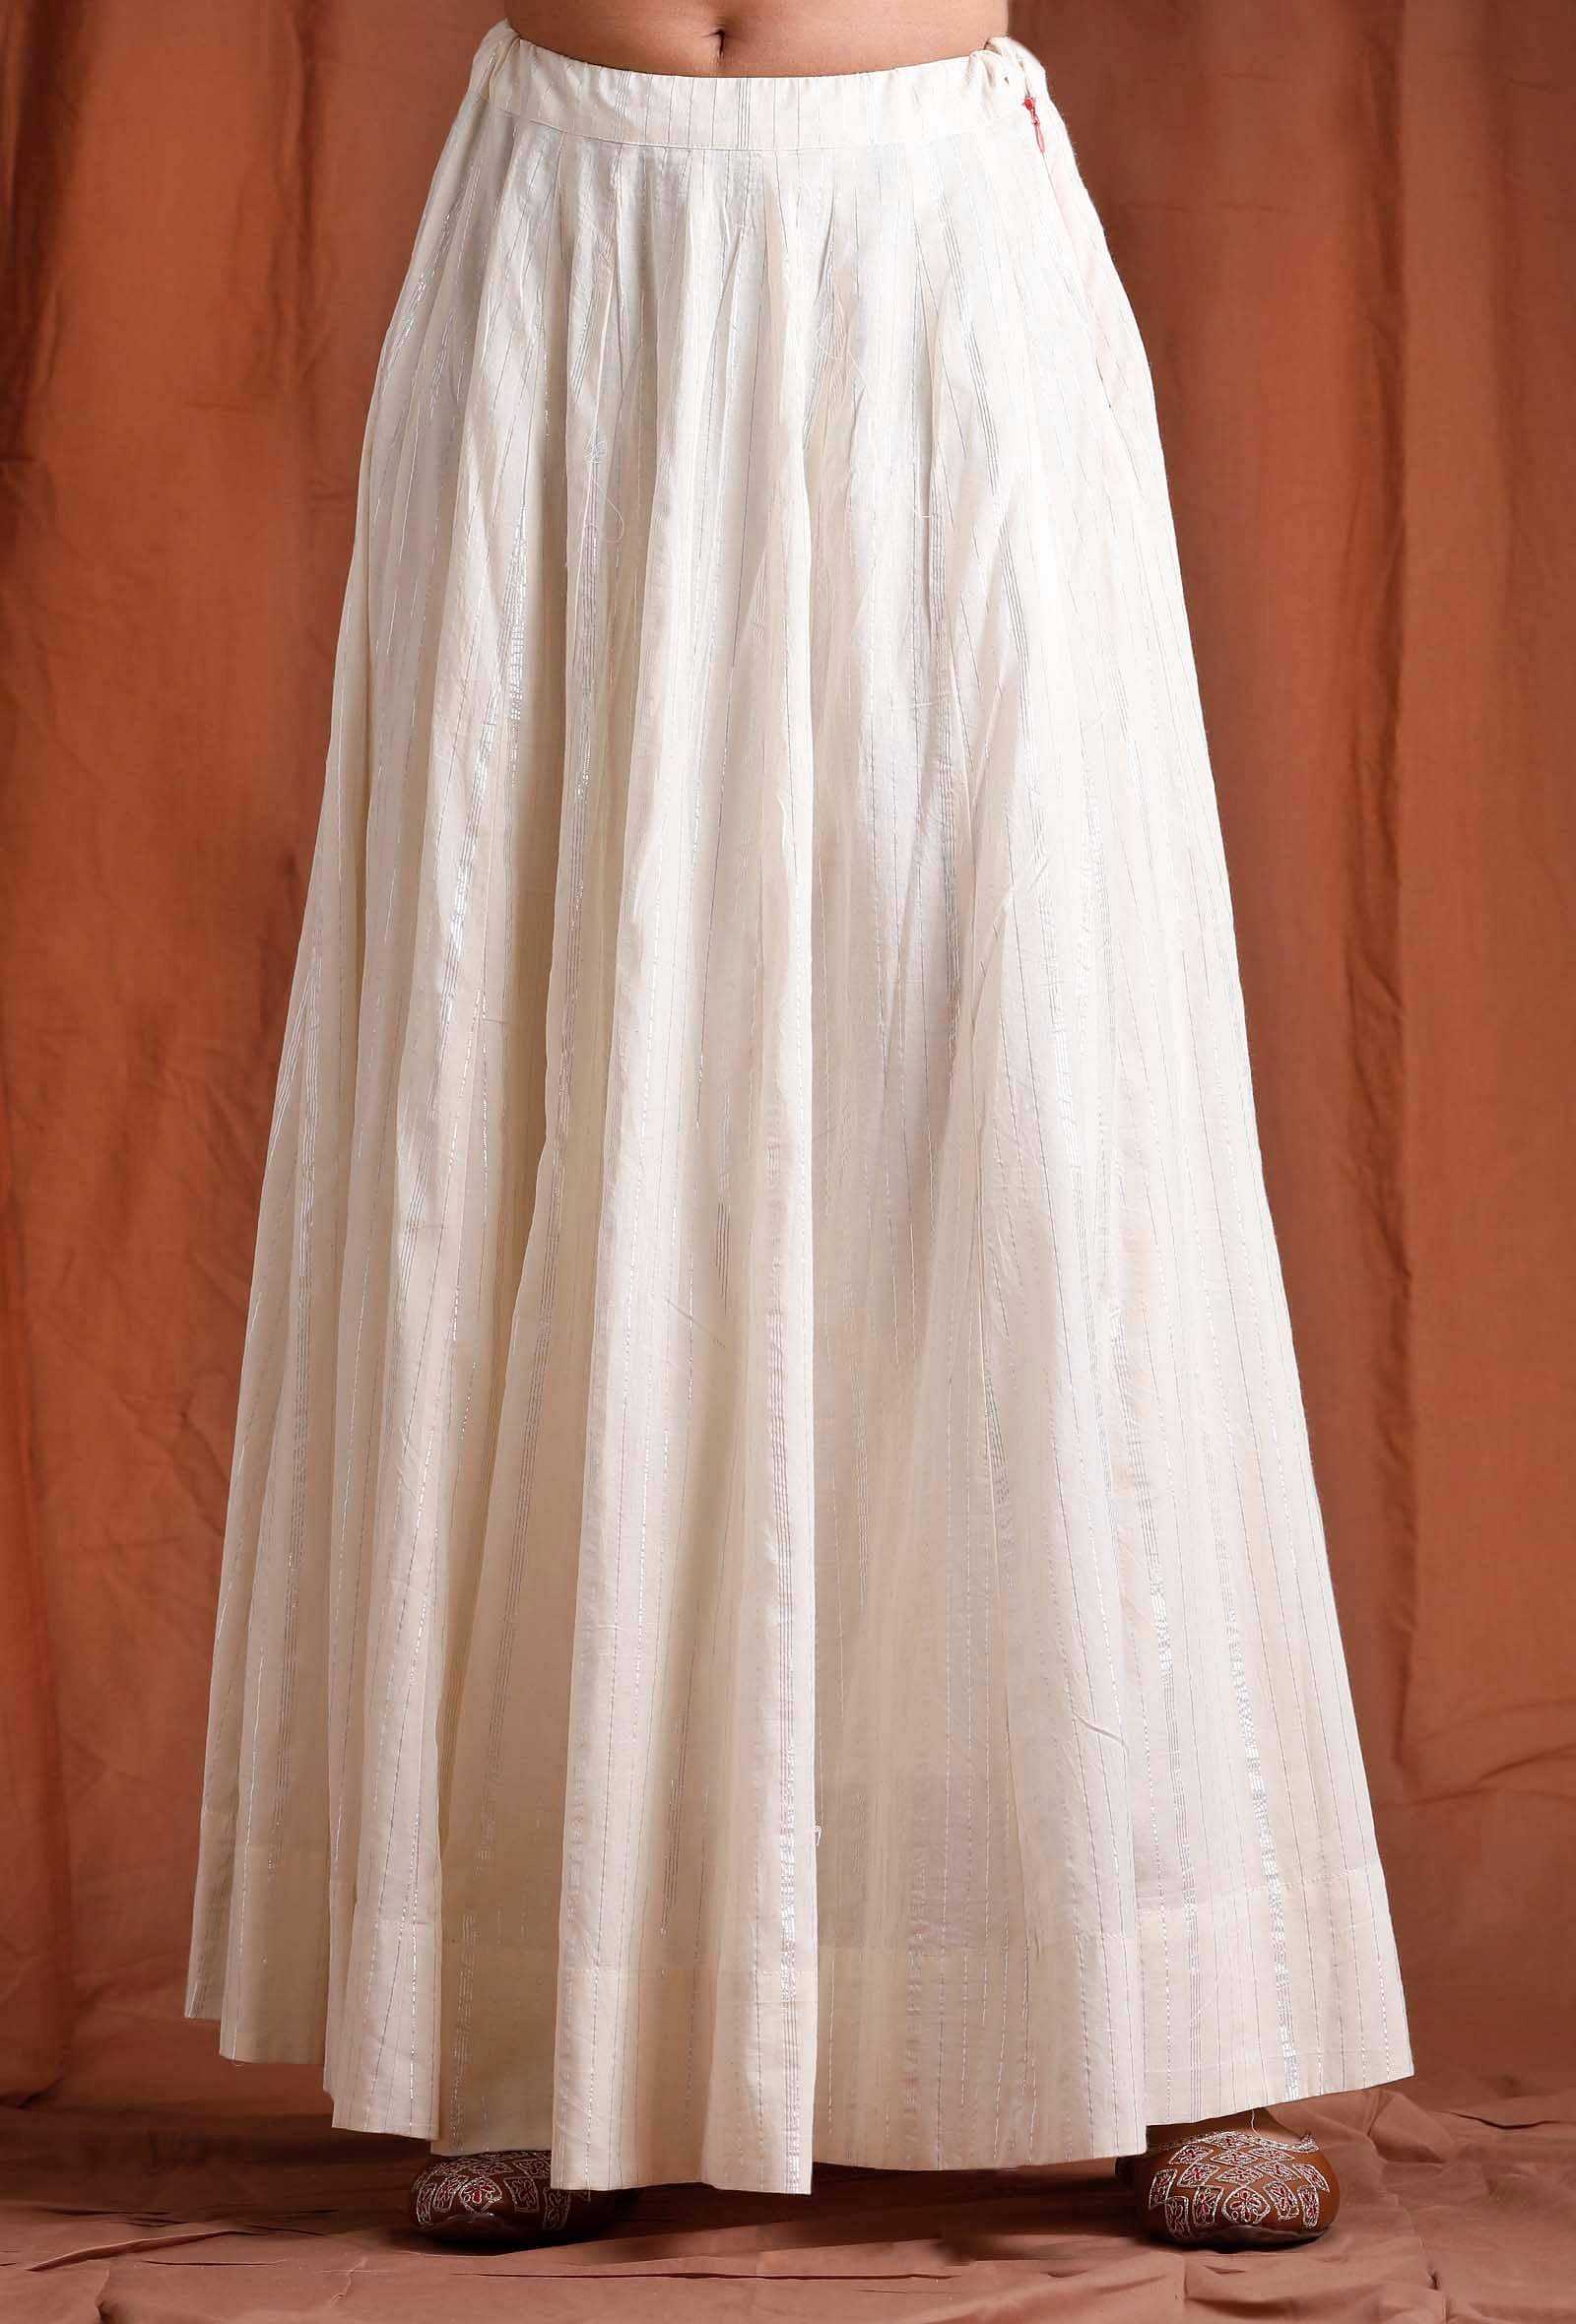 Biba Ethnic Skirts : Buy Biba Off White Printed Skirt Online | Nykaa  Fashion.